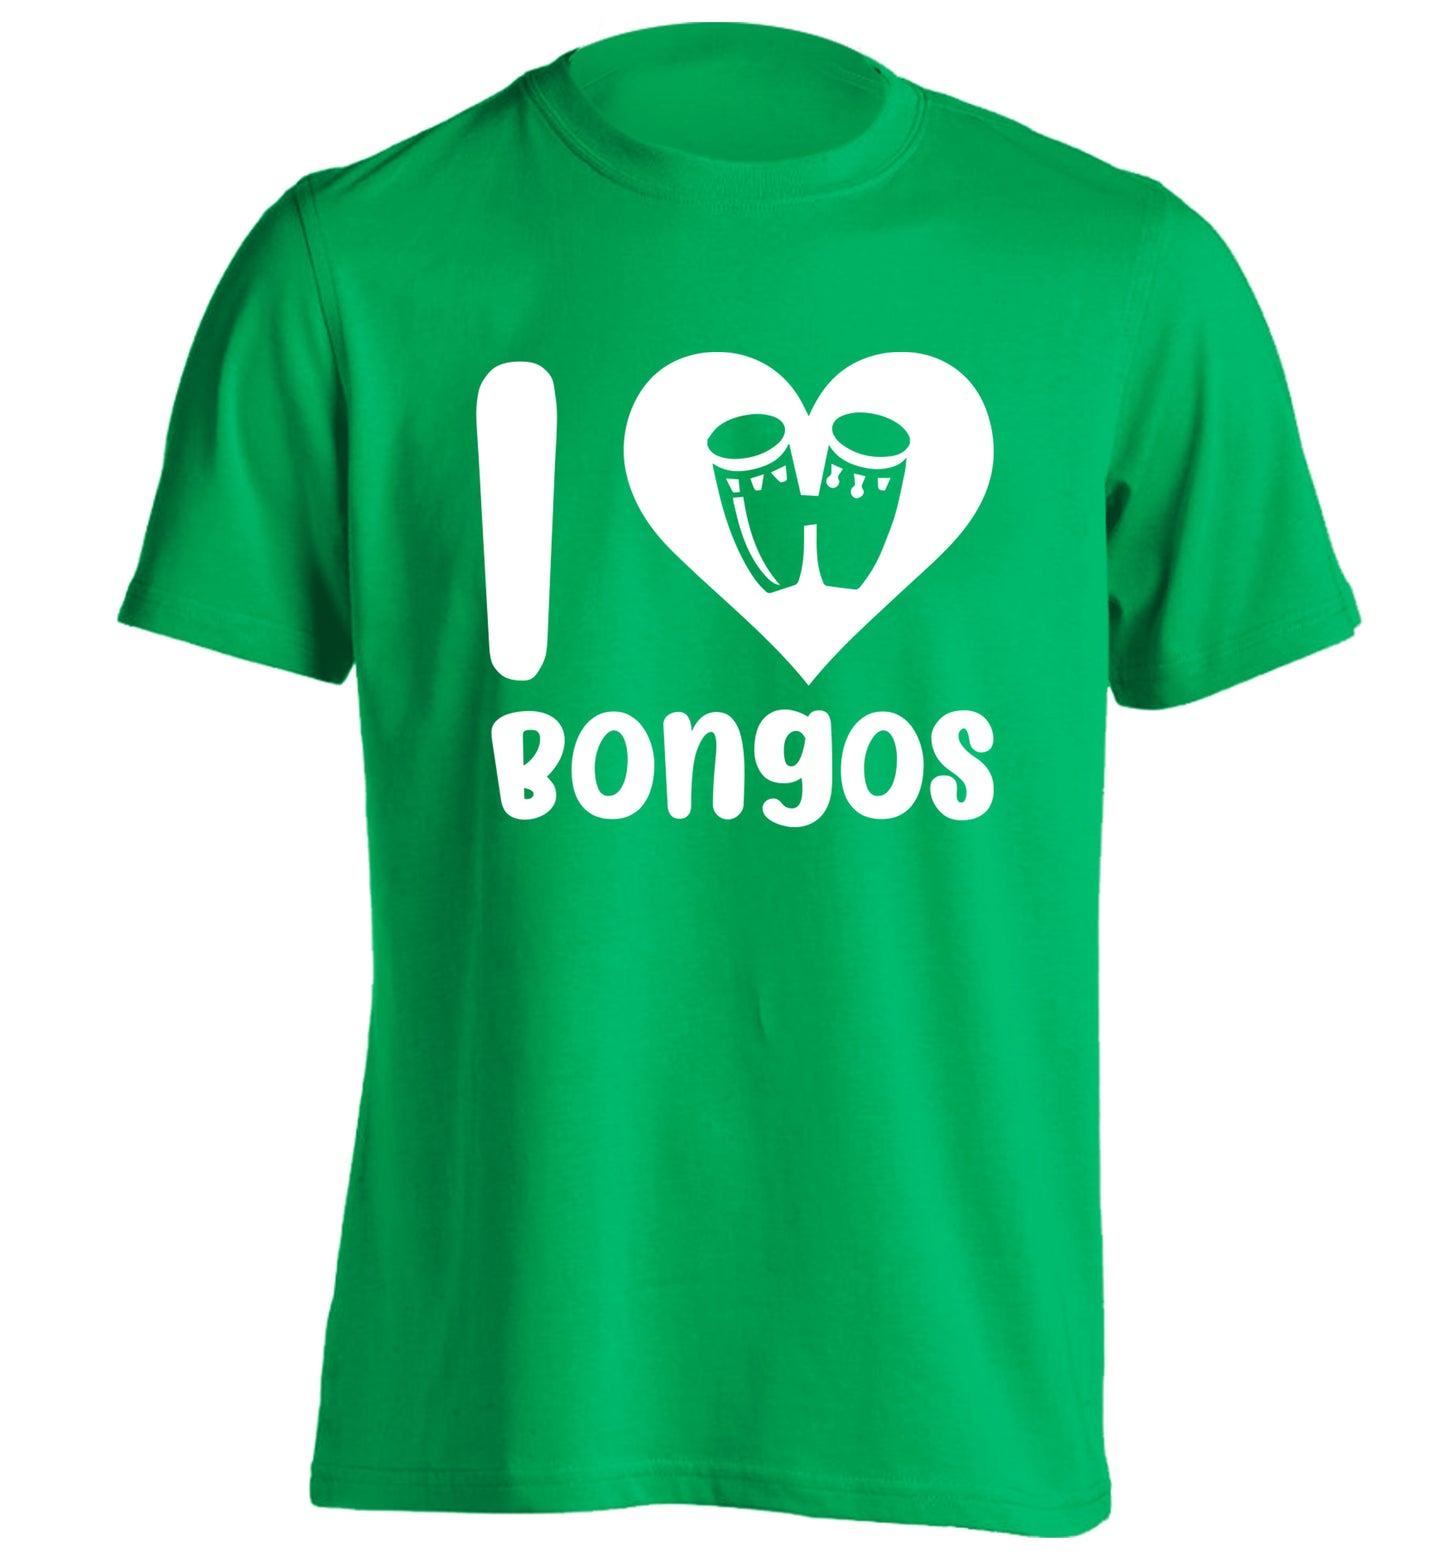 I love bongos adults unisex green Tshirt 2XL